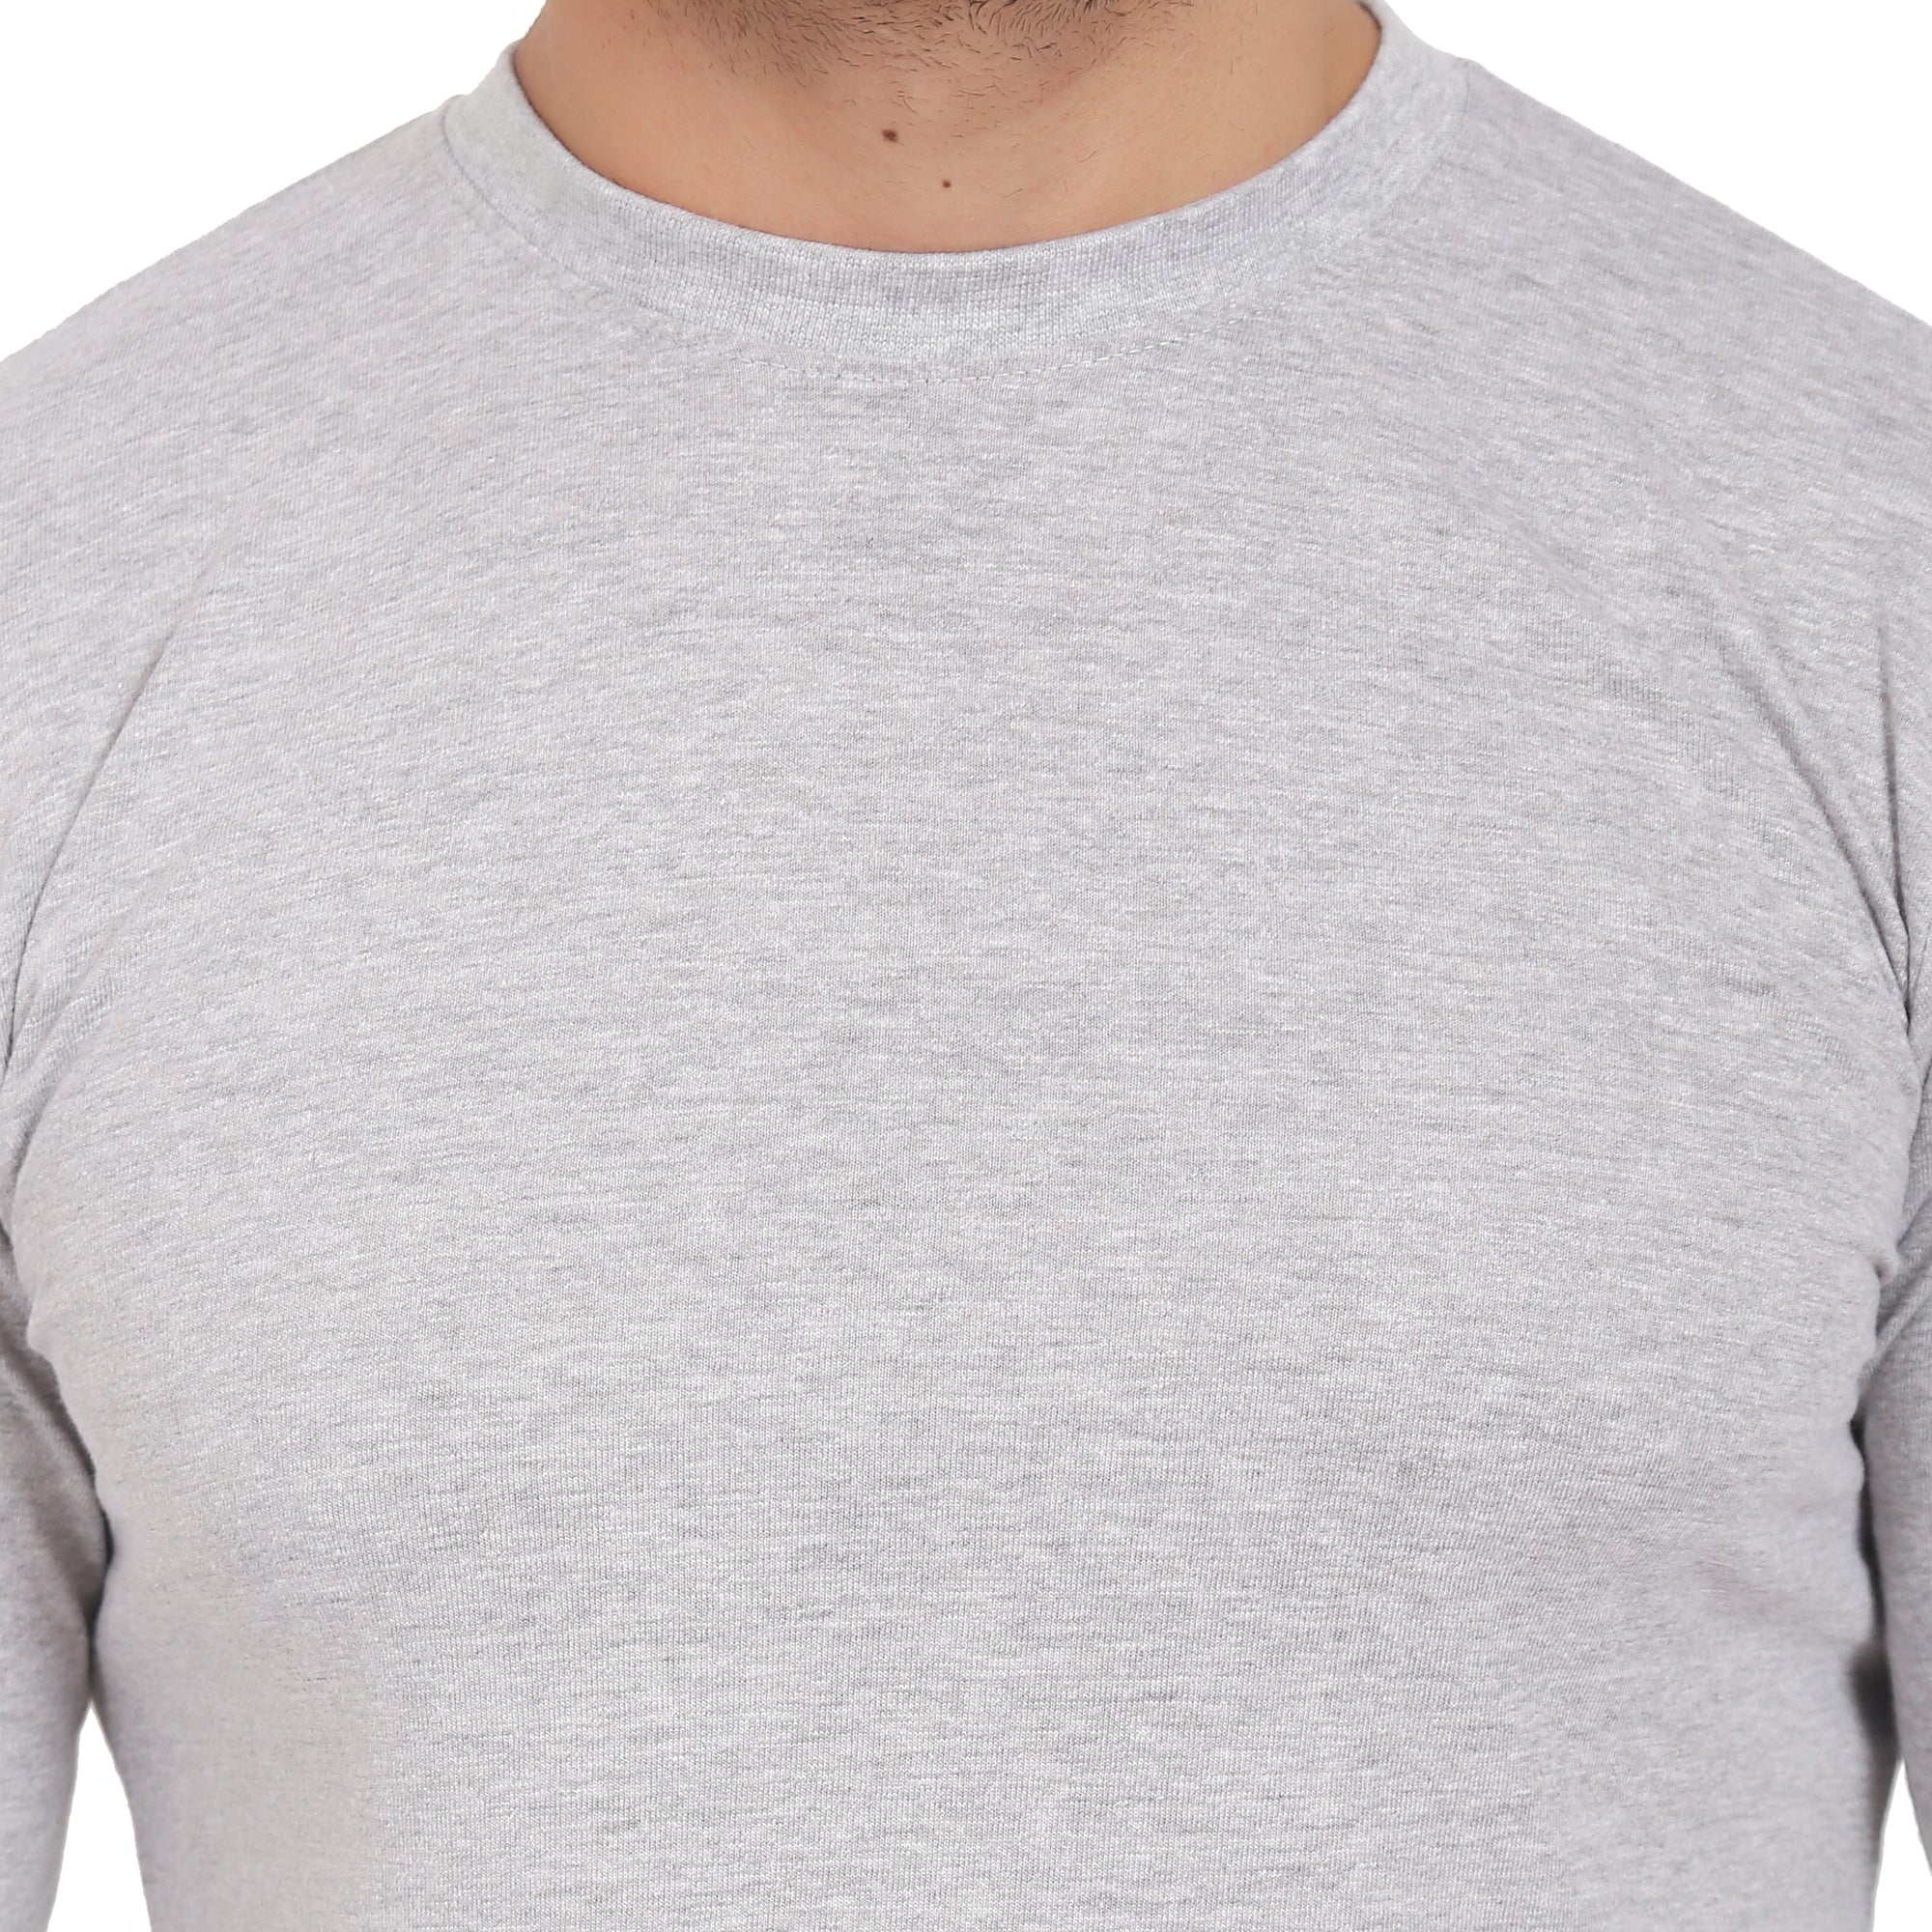 Men Crew Neck Cotton T-Shirts - Full Sleeves, Light Grey Colour